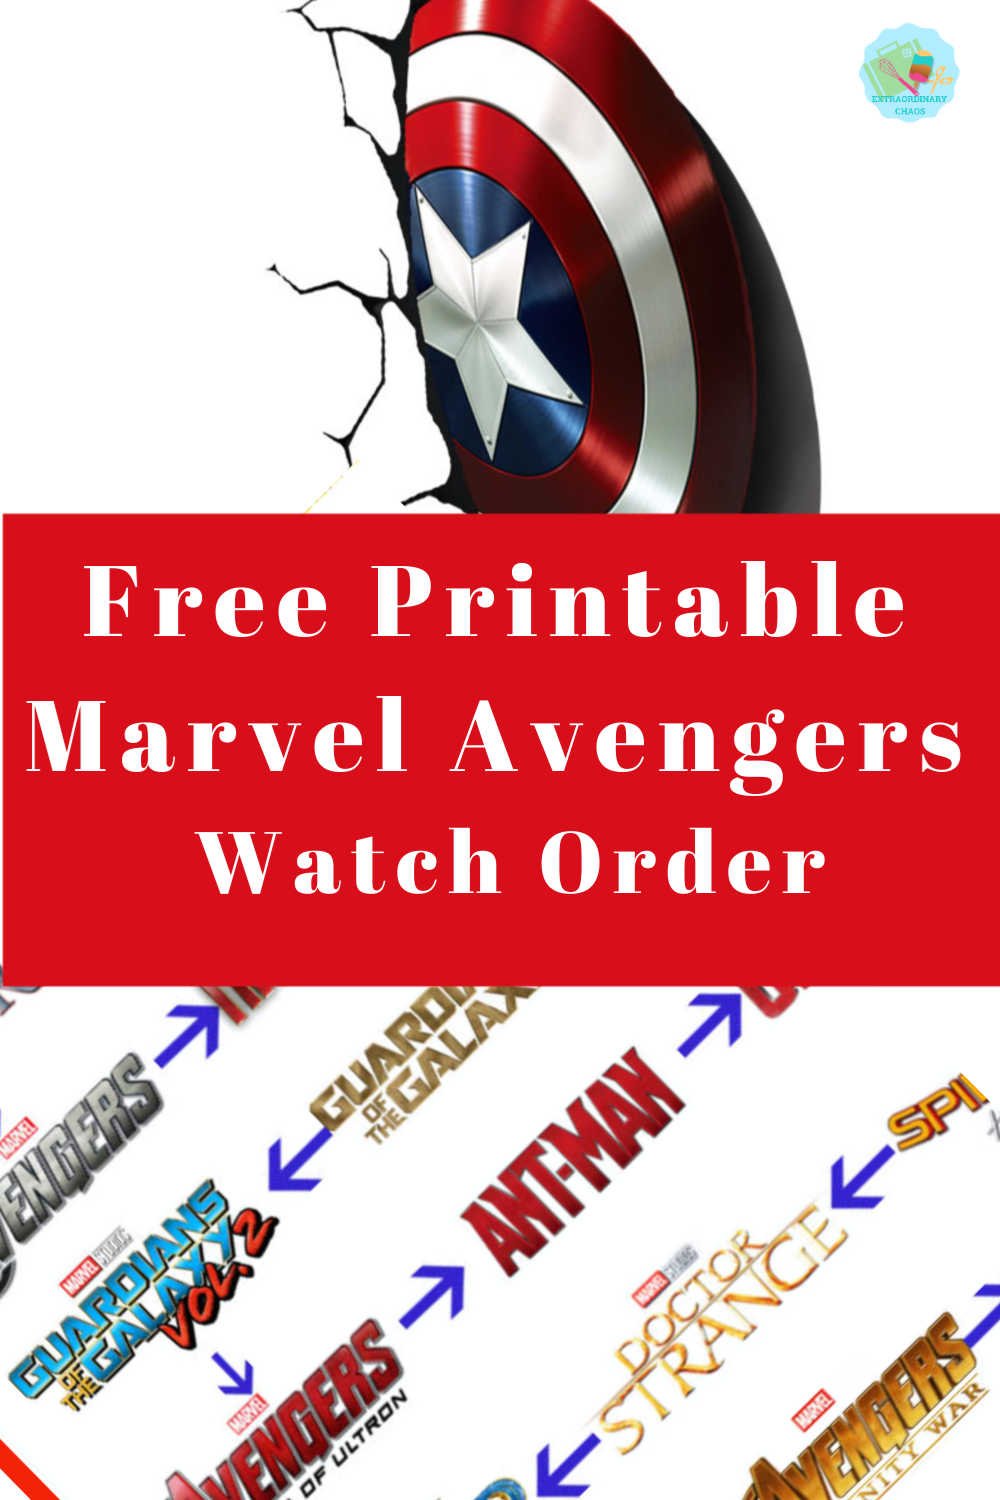 Free Printable Marvel Avengers Watch Order